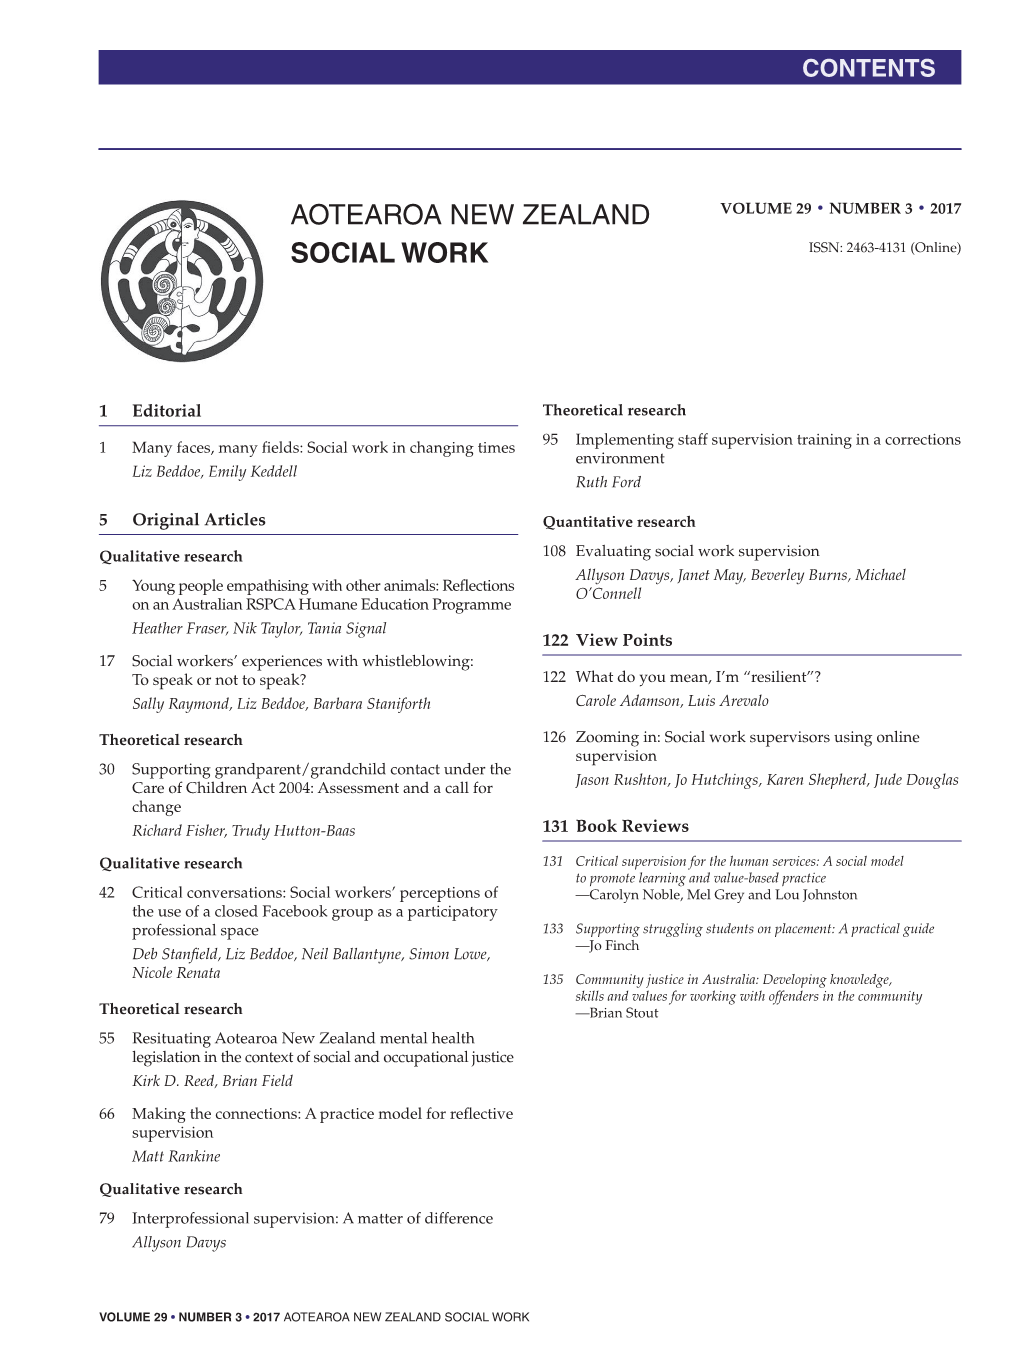 Aotearoa New Zealand Social Work Editorial